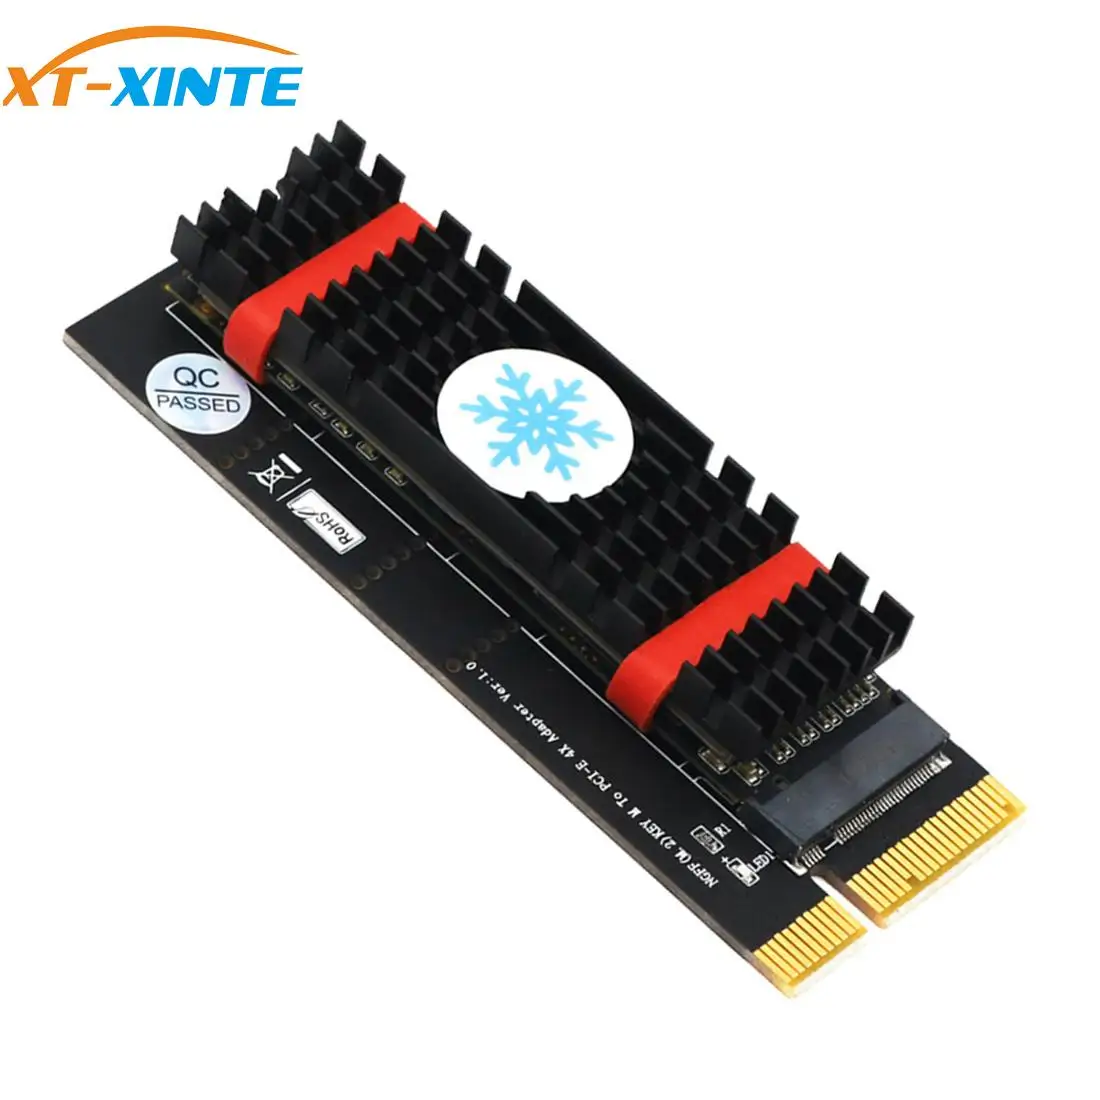 

XT-XINTE M.2 Key M SSD to PCI- E 4X Adapter Converter Card Vertical Installation Heatsink Optional for NGFF M.2 2230-2280 SSD